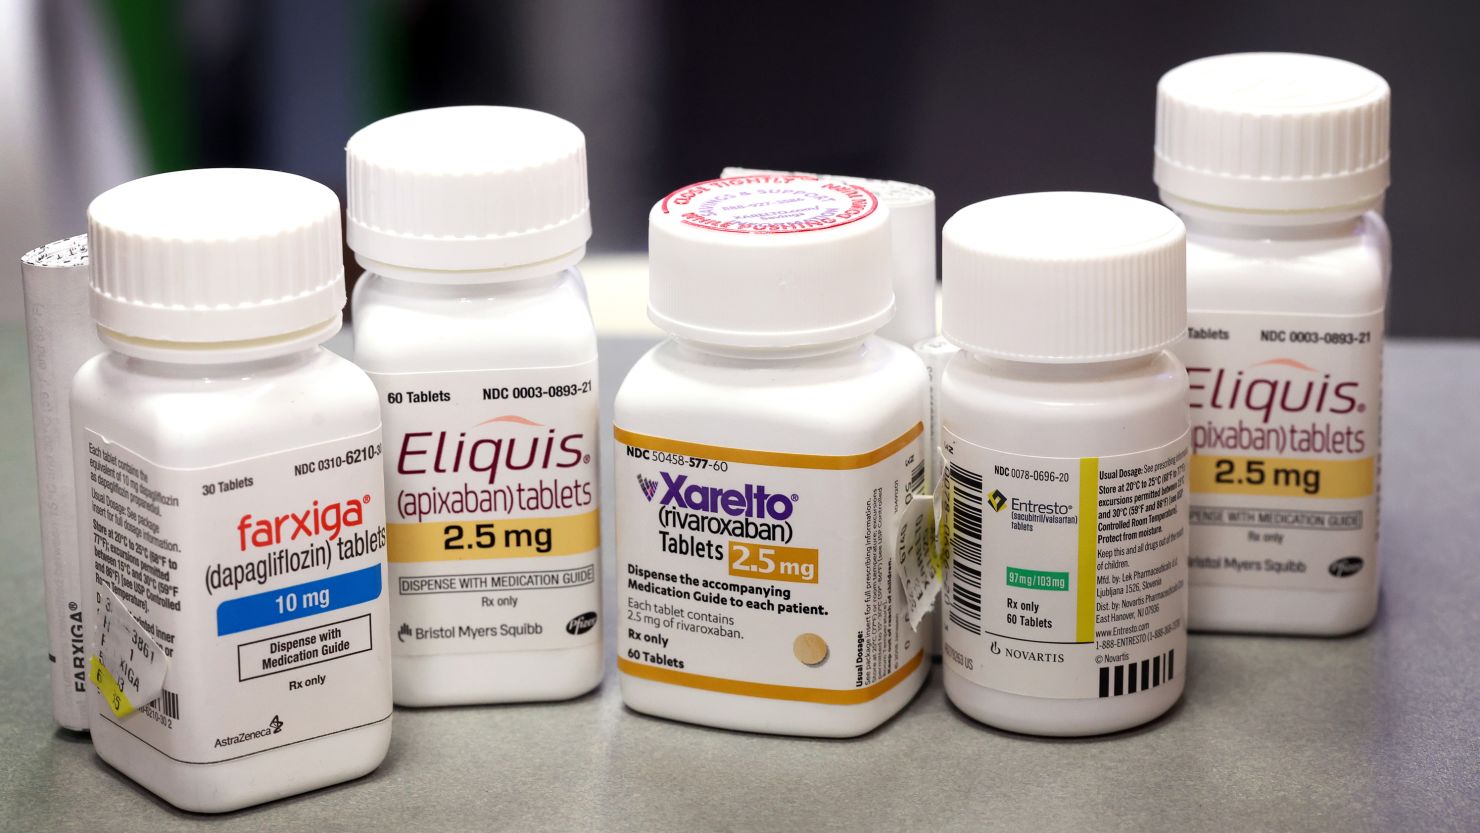 Manufacturers will participate in Medicare's drug price negotiation program.